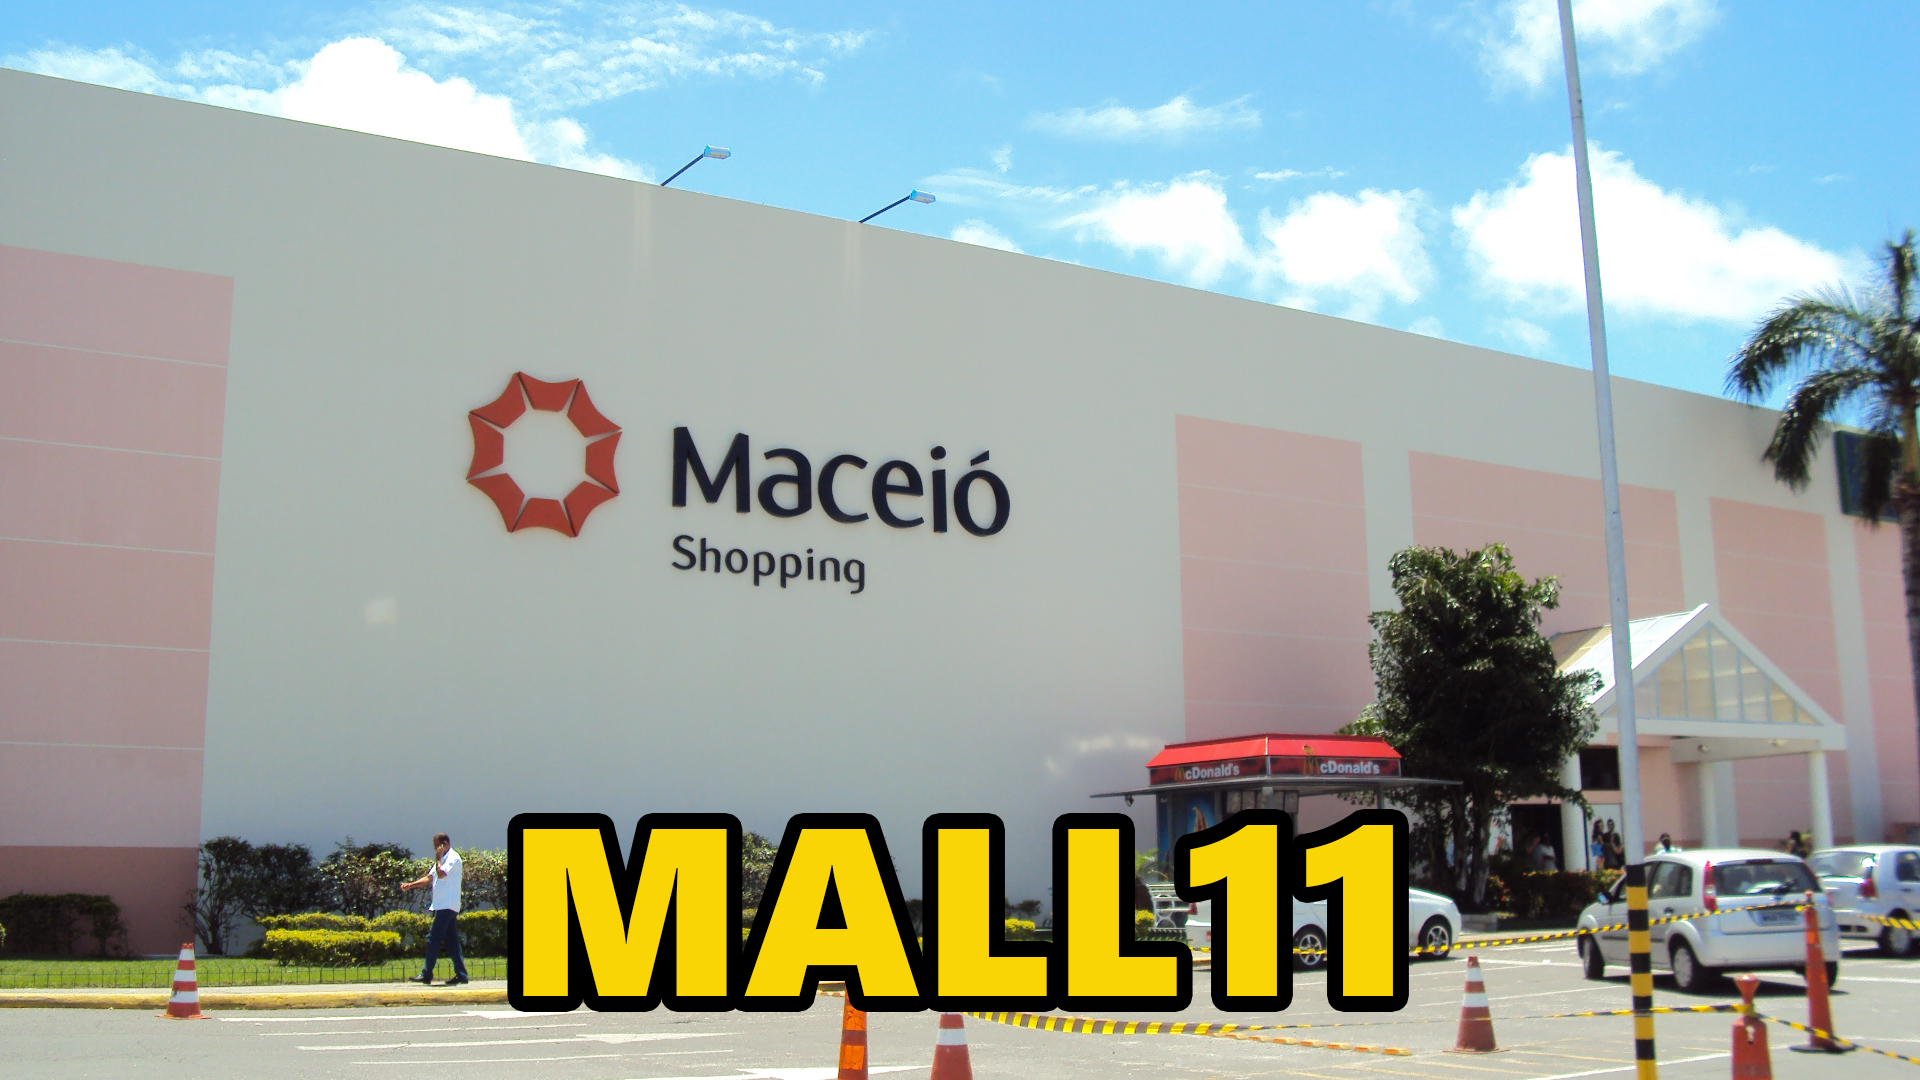 MALL11 - Malls Brasil Plural - FII de Shopping